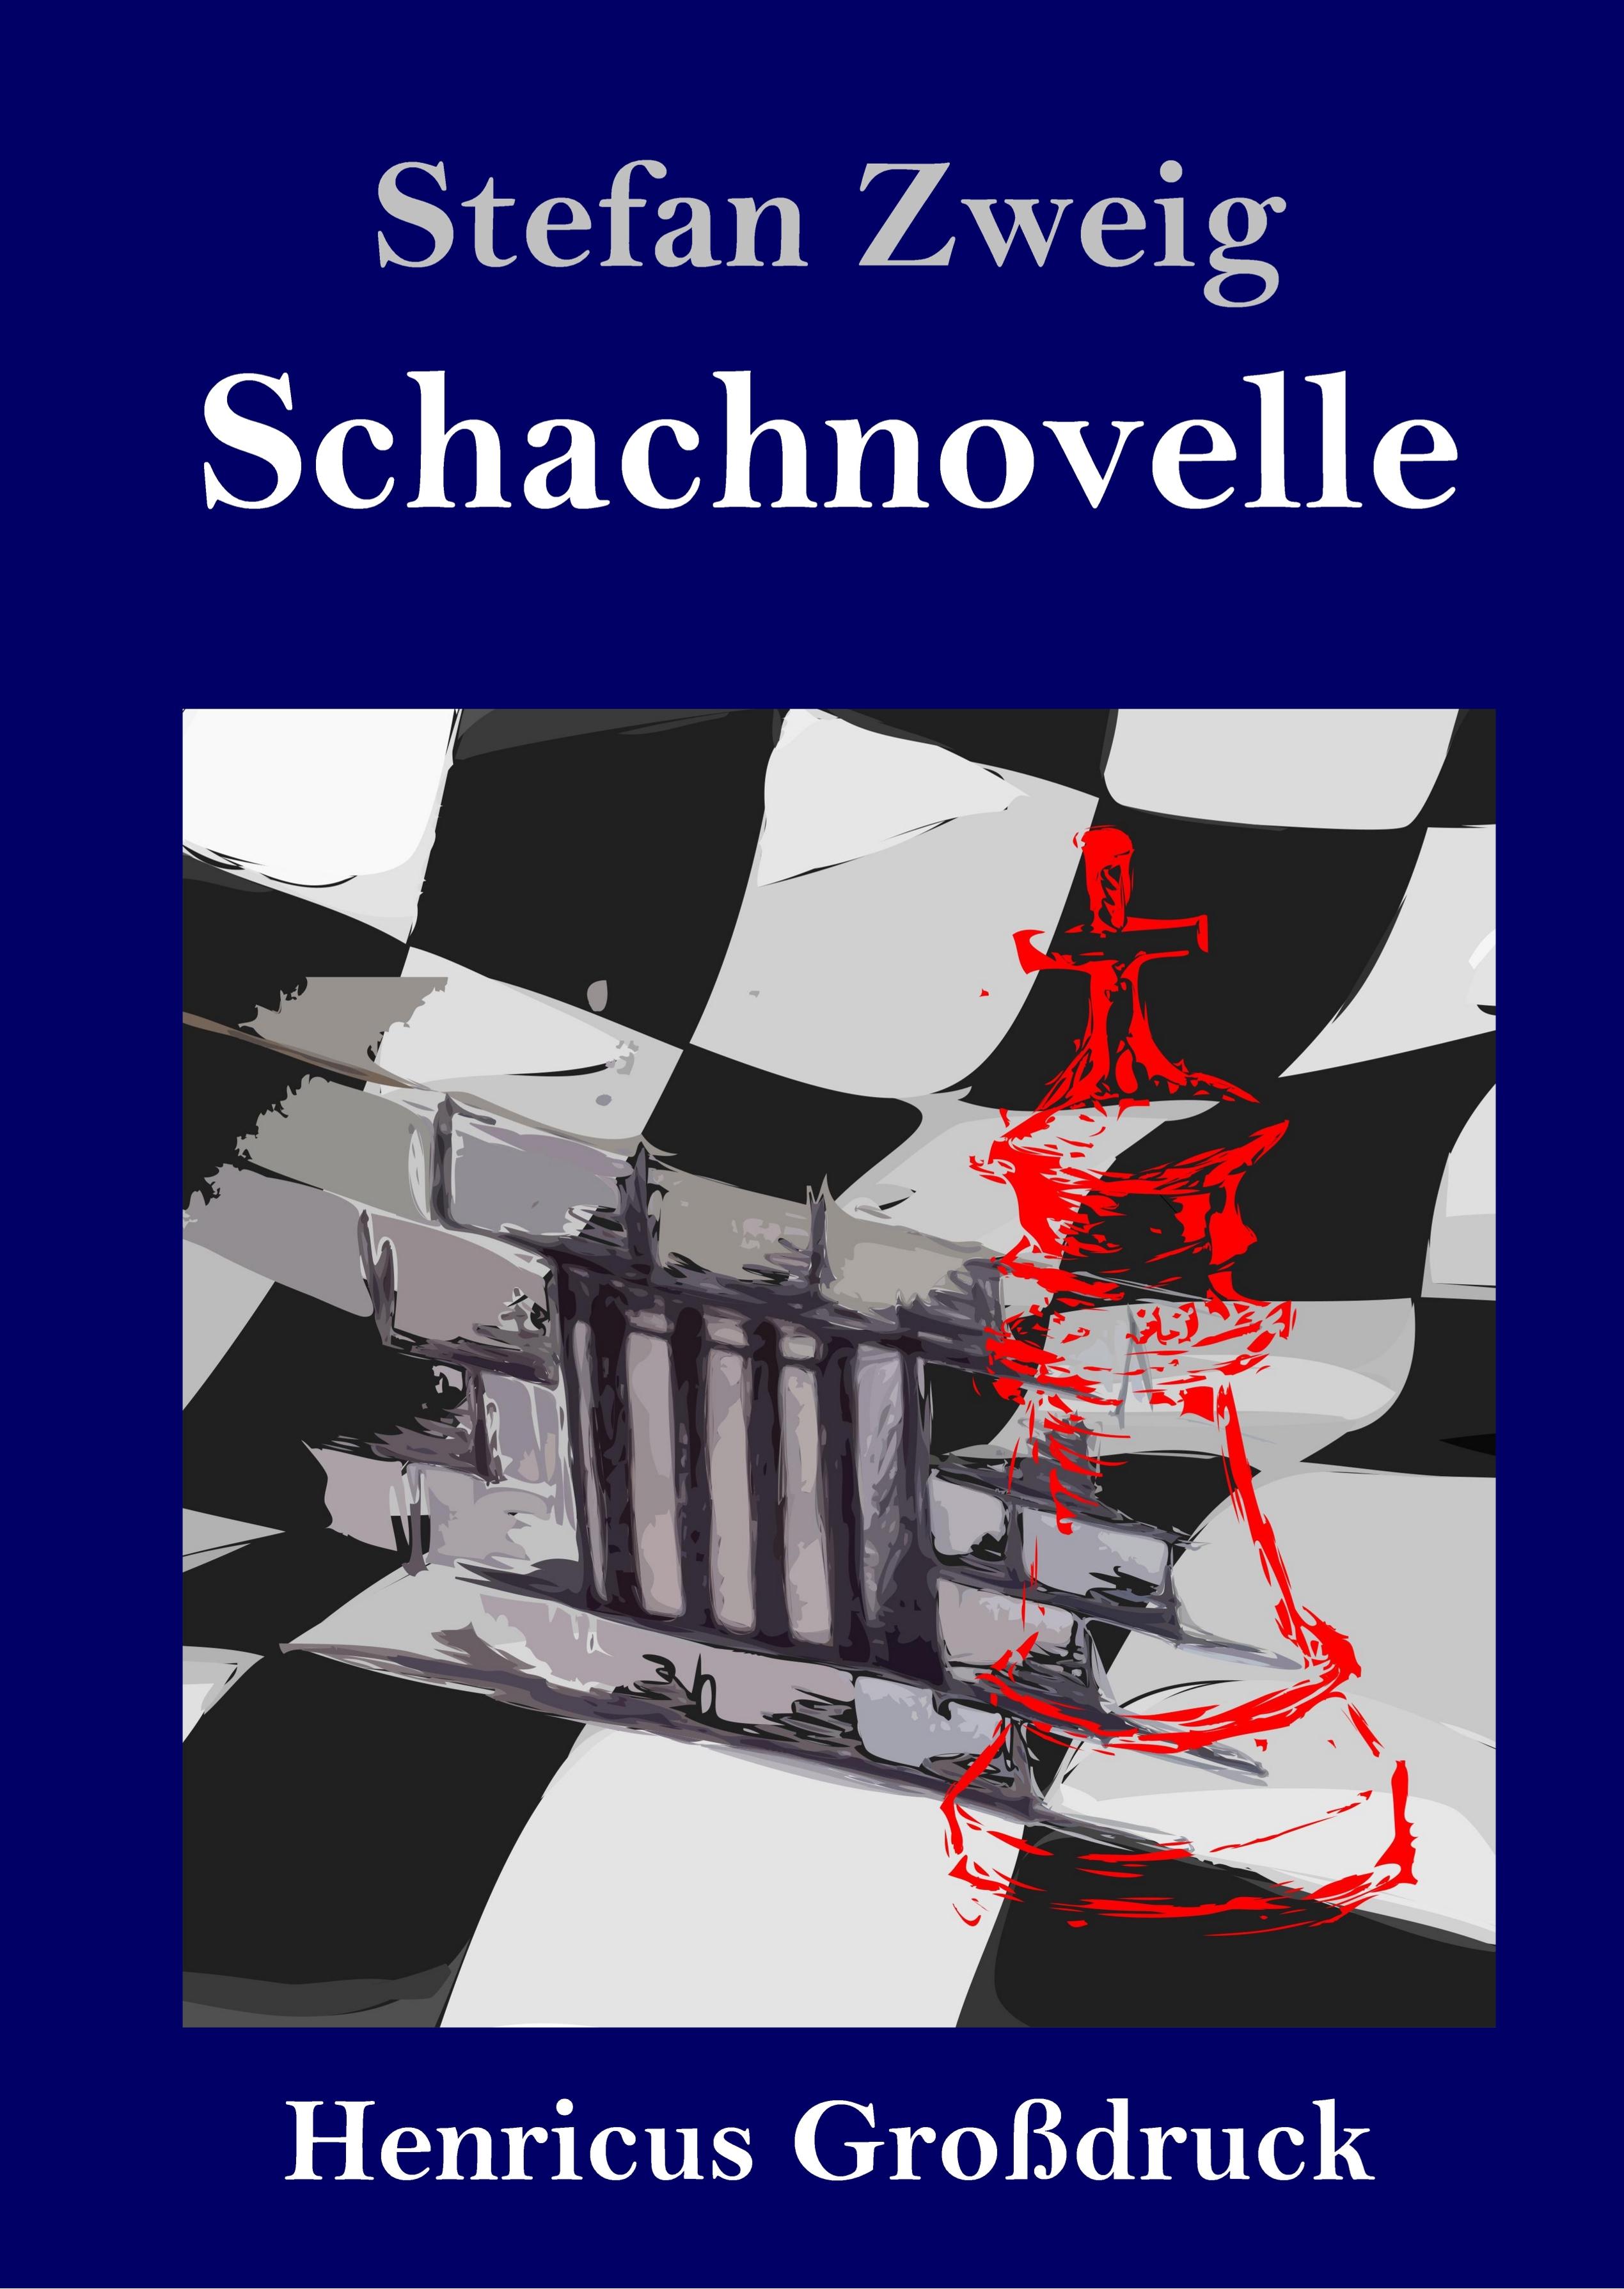 Schachnovelle (Großdruck) / Stefan Zweig / Buch / HC runder Rücken kaschiert / 64 S. / Deutsch / 2019 / Henricus / EAN 9783847825074 - Zweig, Stefan